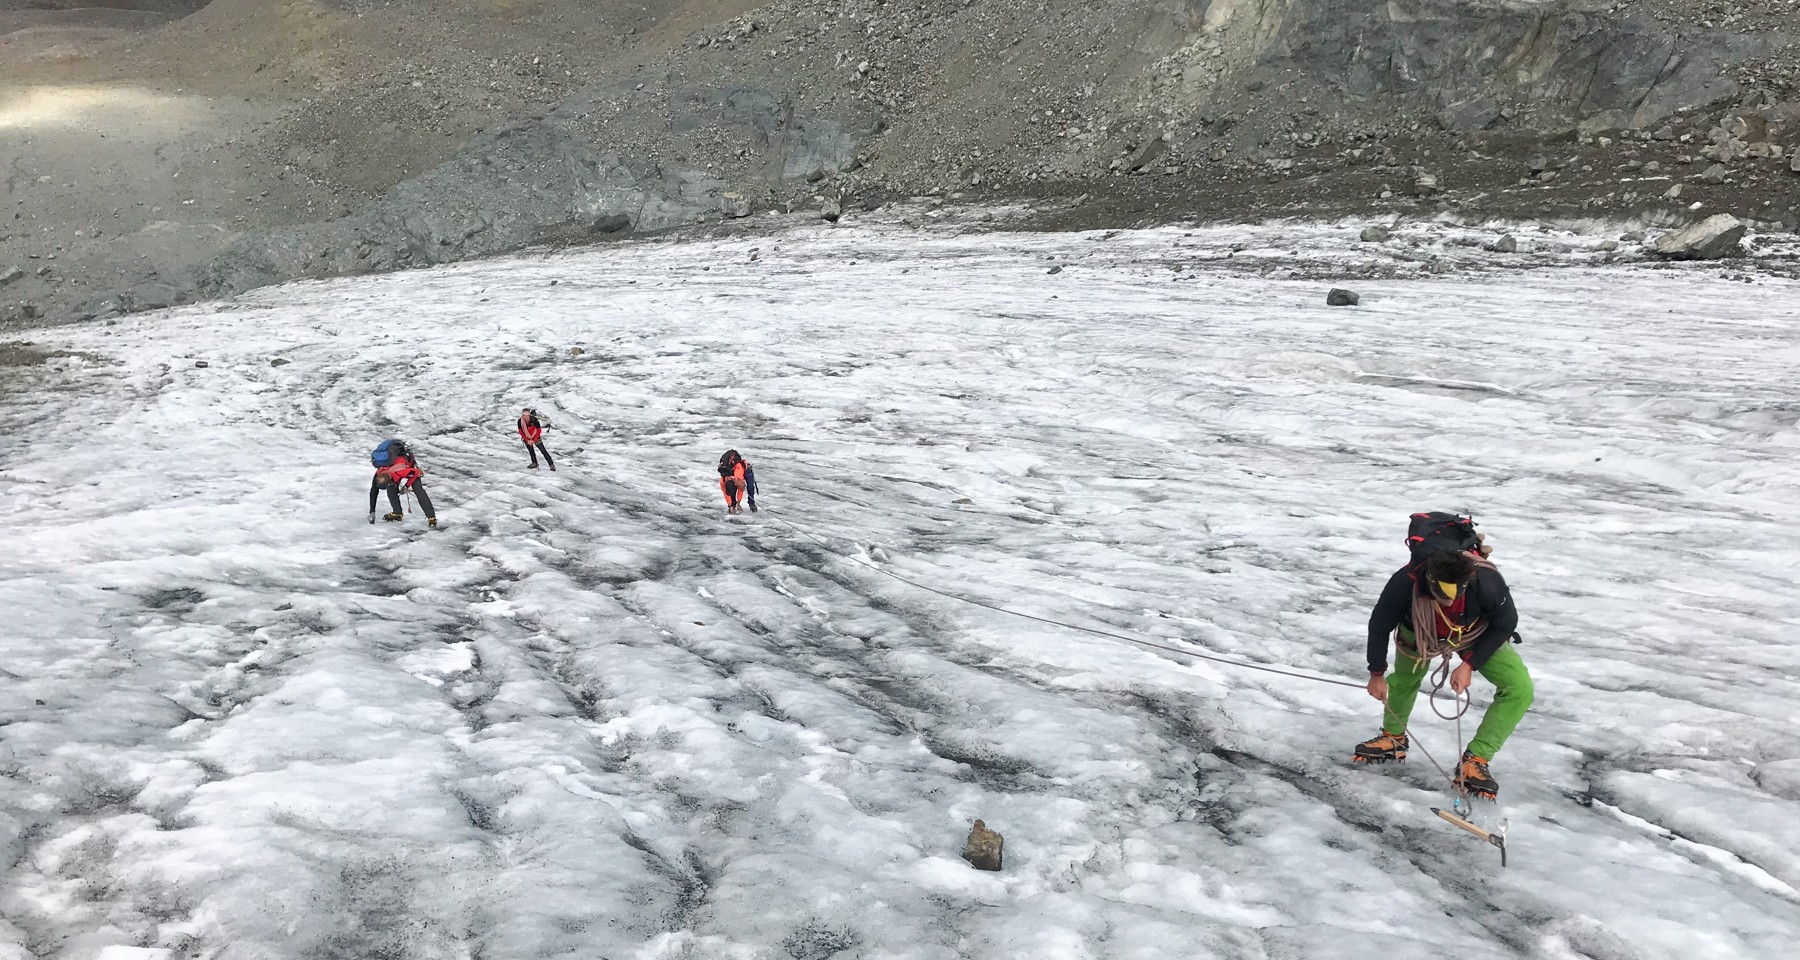 Glacier travel course with an ascent of Grossglockner Stuedlgrad